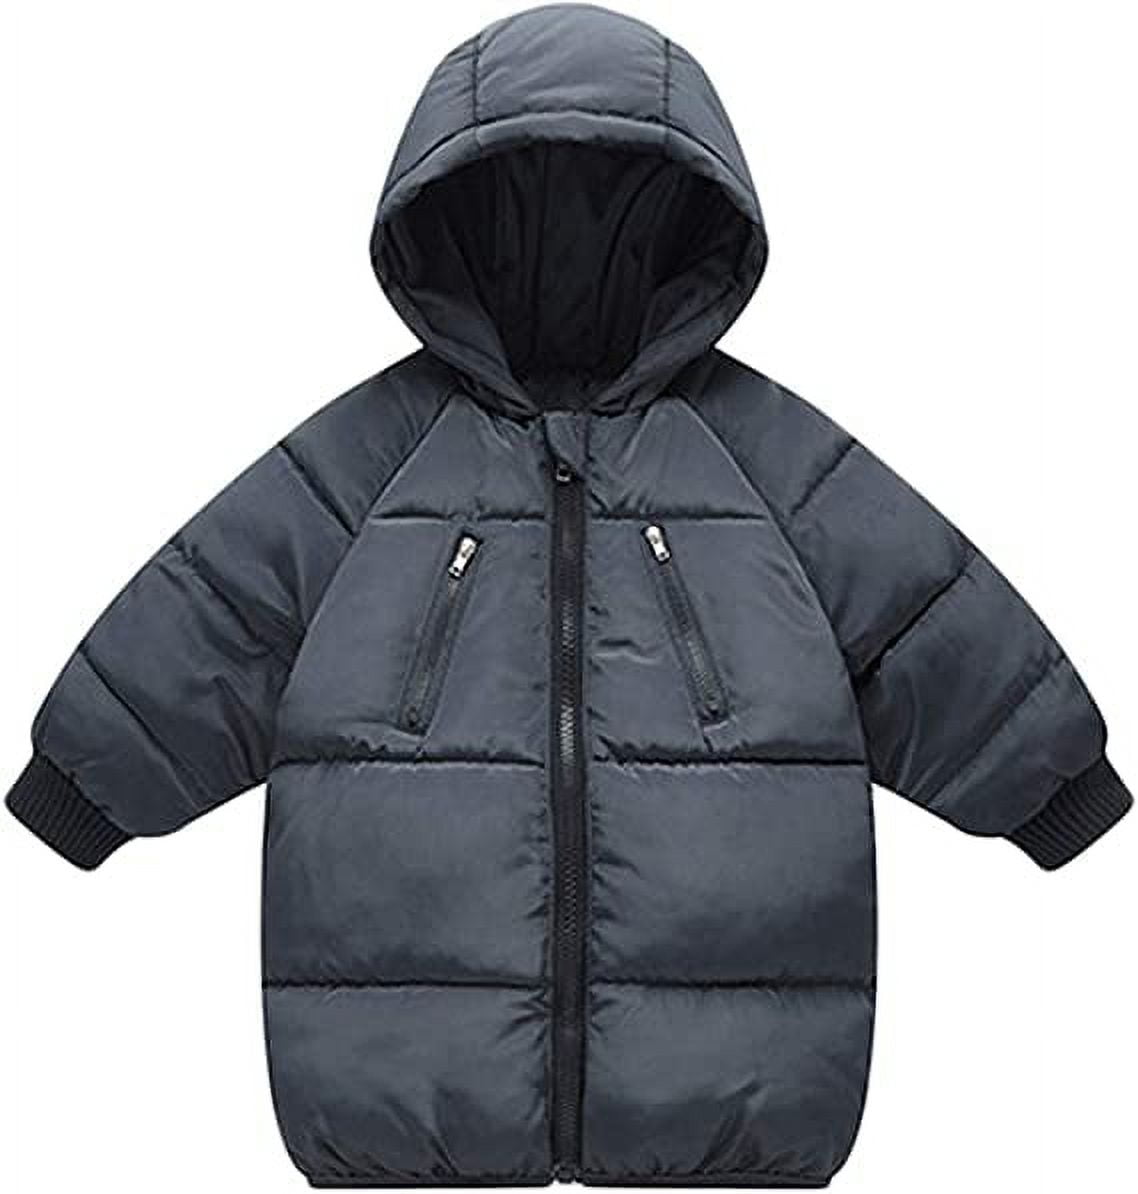 LANBAOSI Toddler Winter Coat Boy Puffer Winter Jacket with Hooded 5T ...